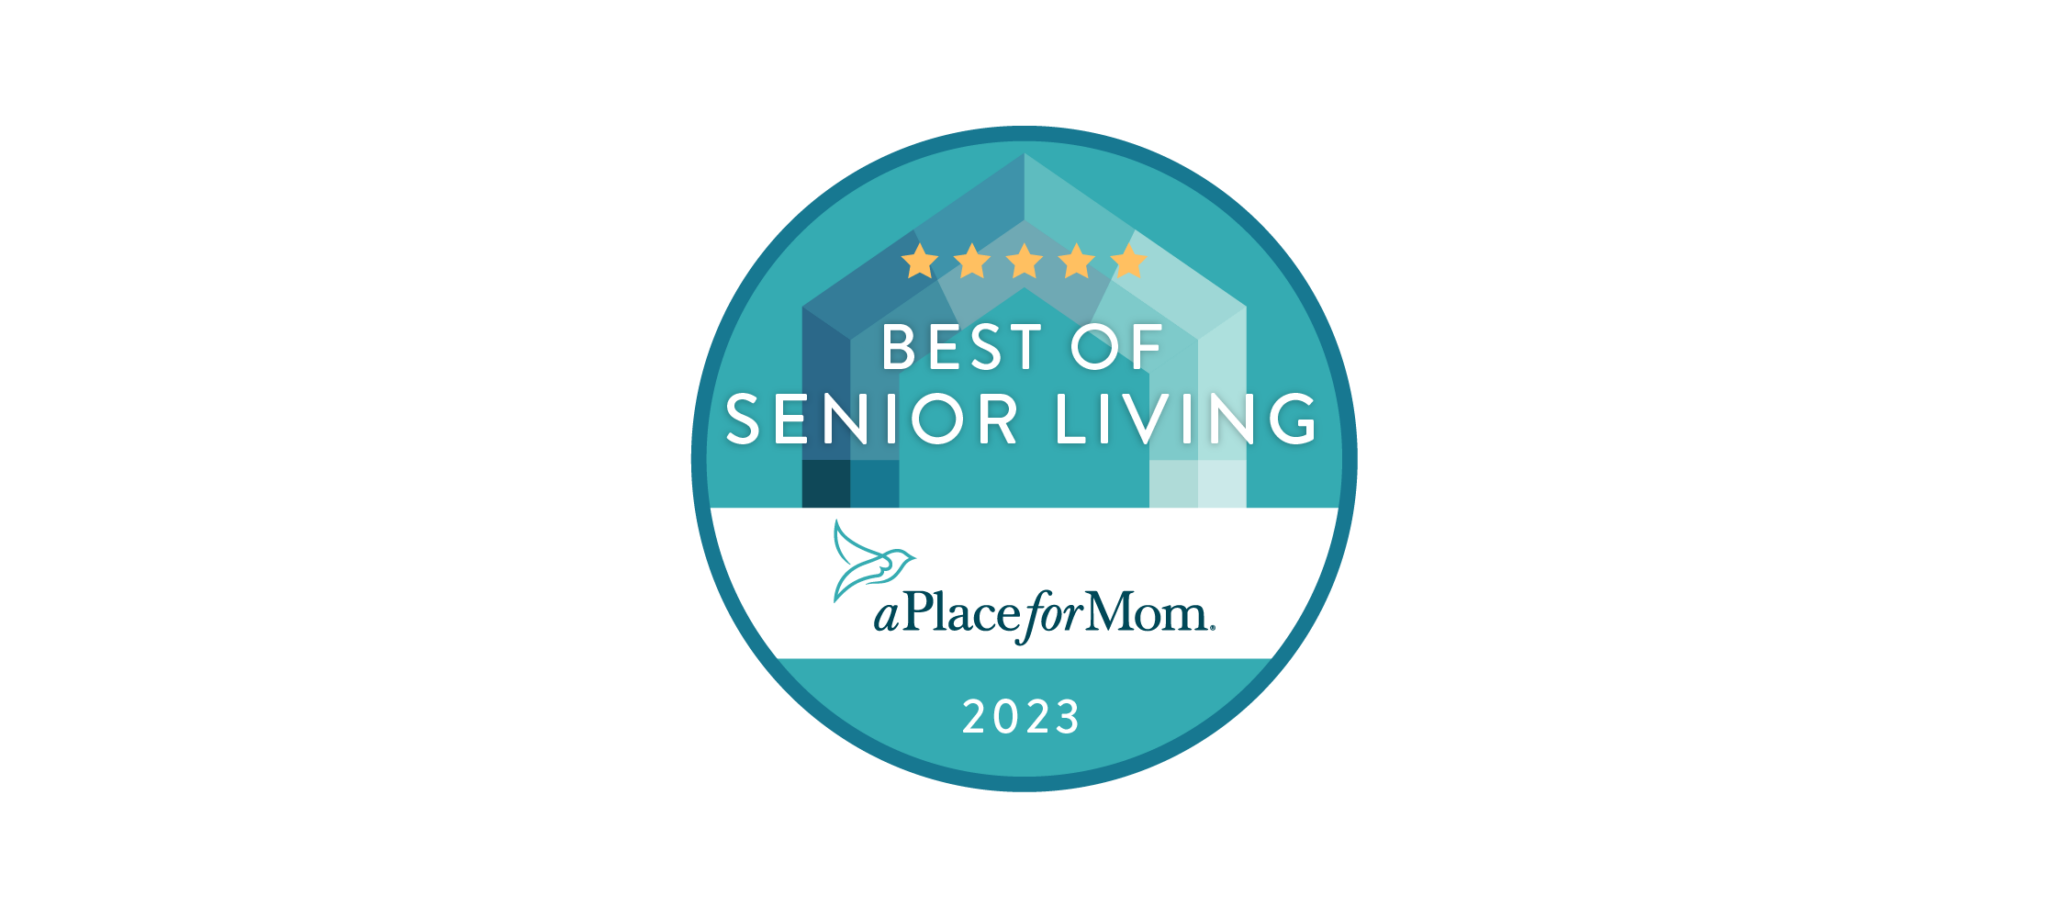 A Place for Mom - Best of Senior Living 2023 badge illustration